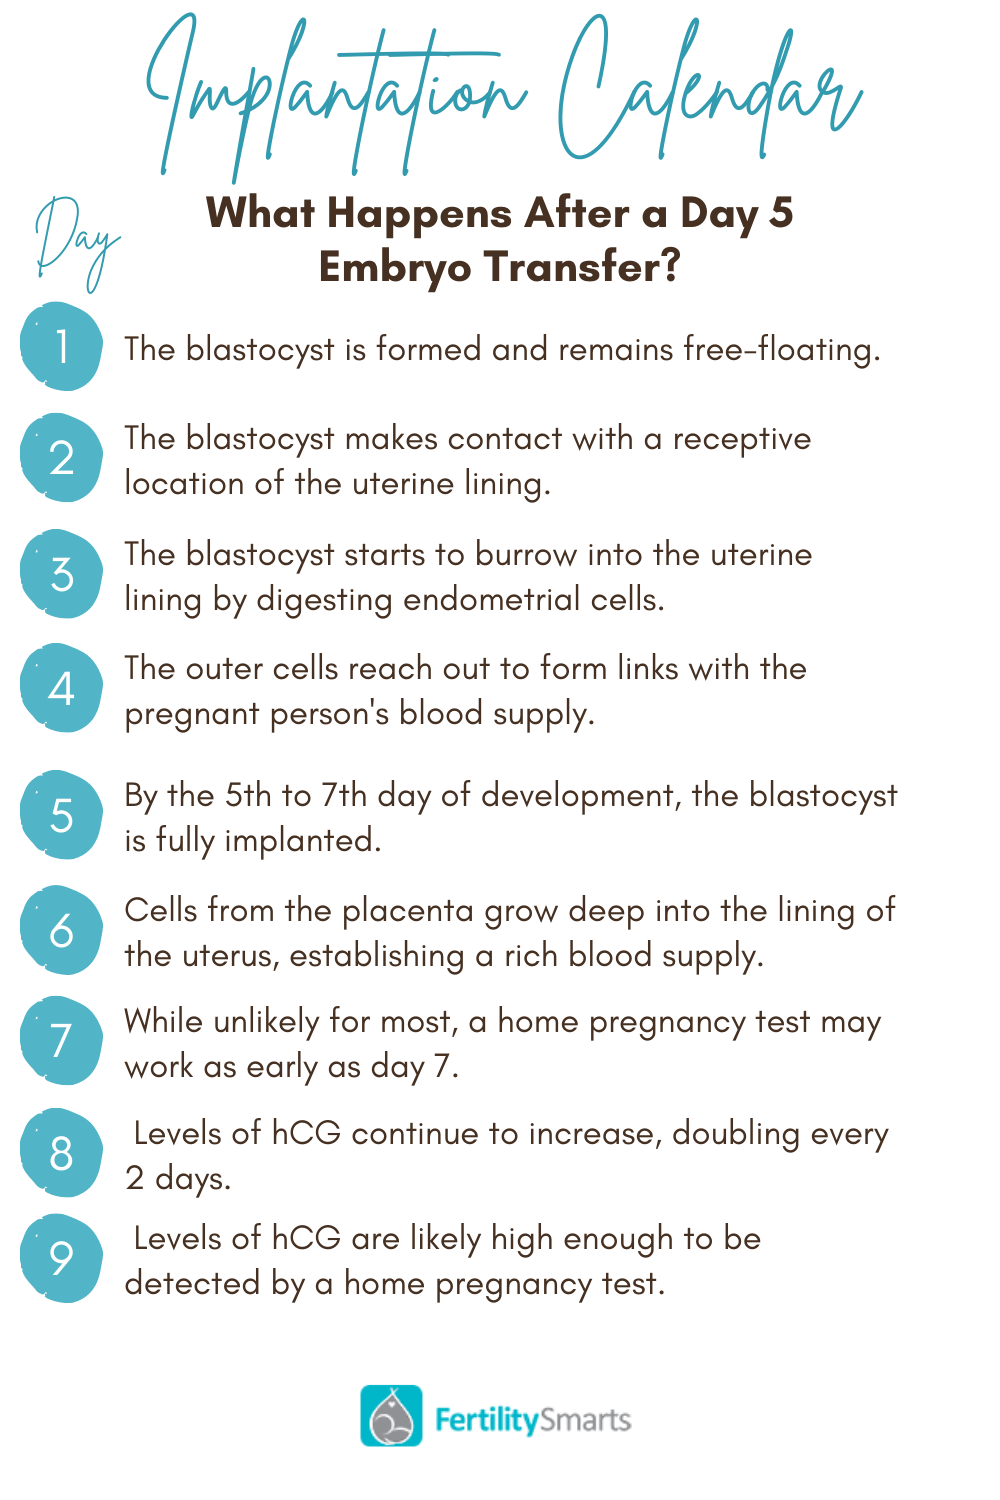 An implantation timeline after a 5 day embryo transfer